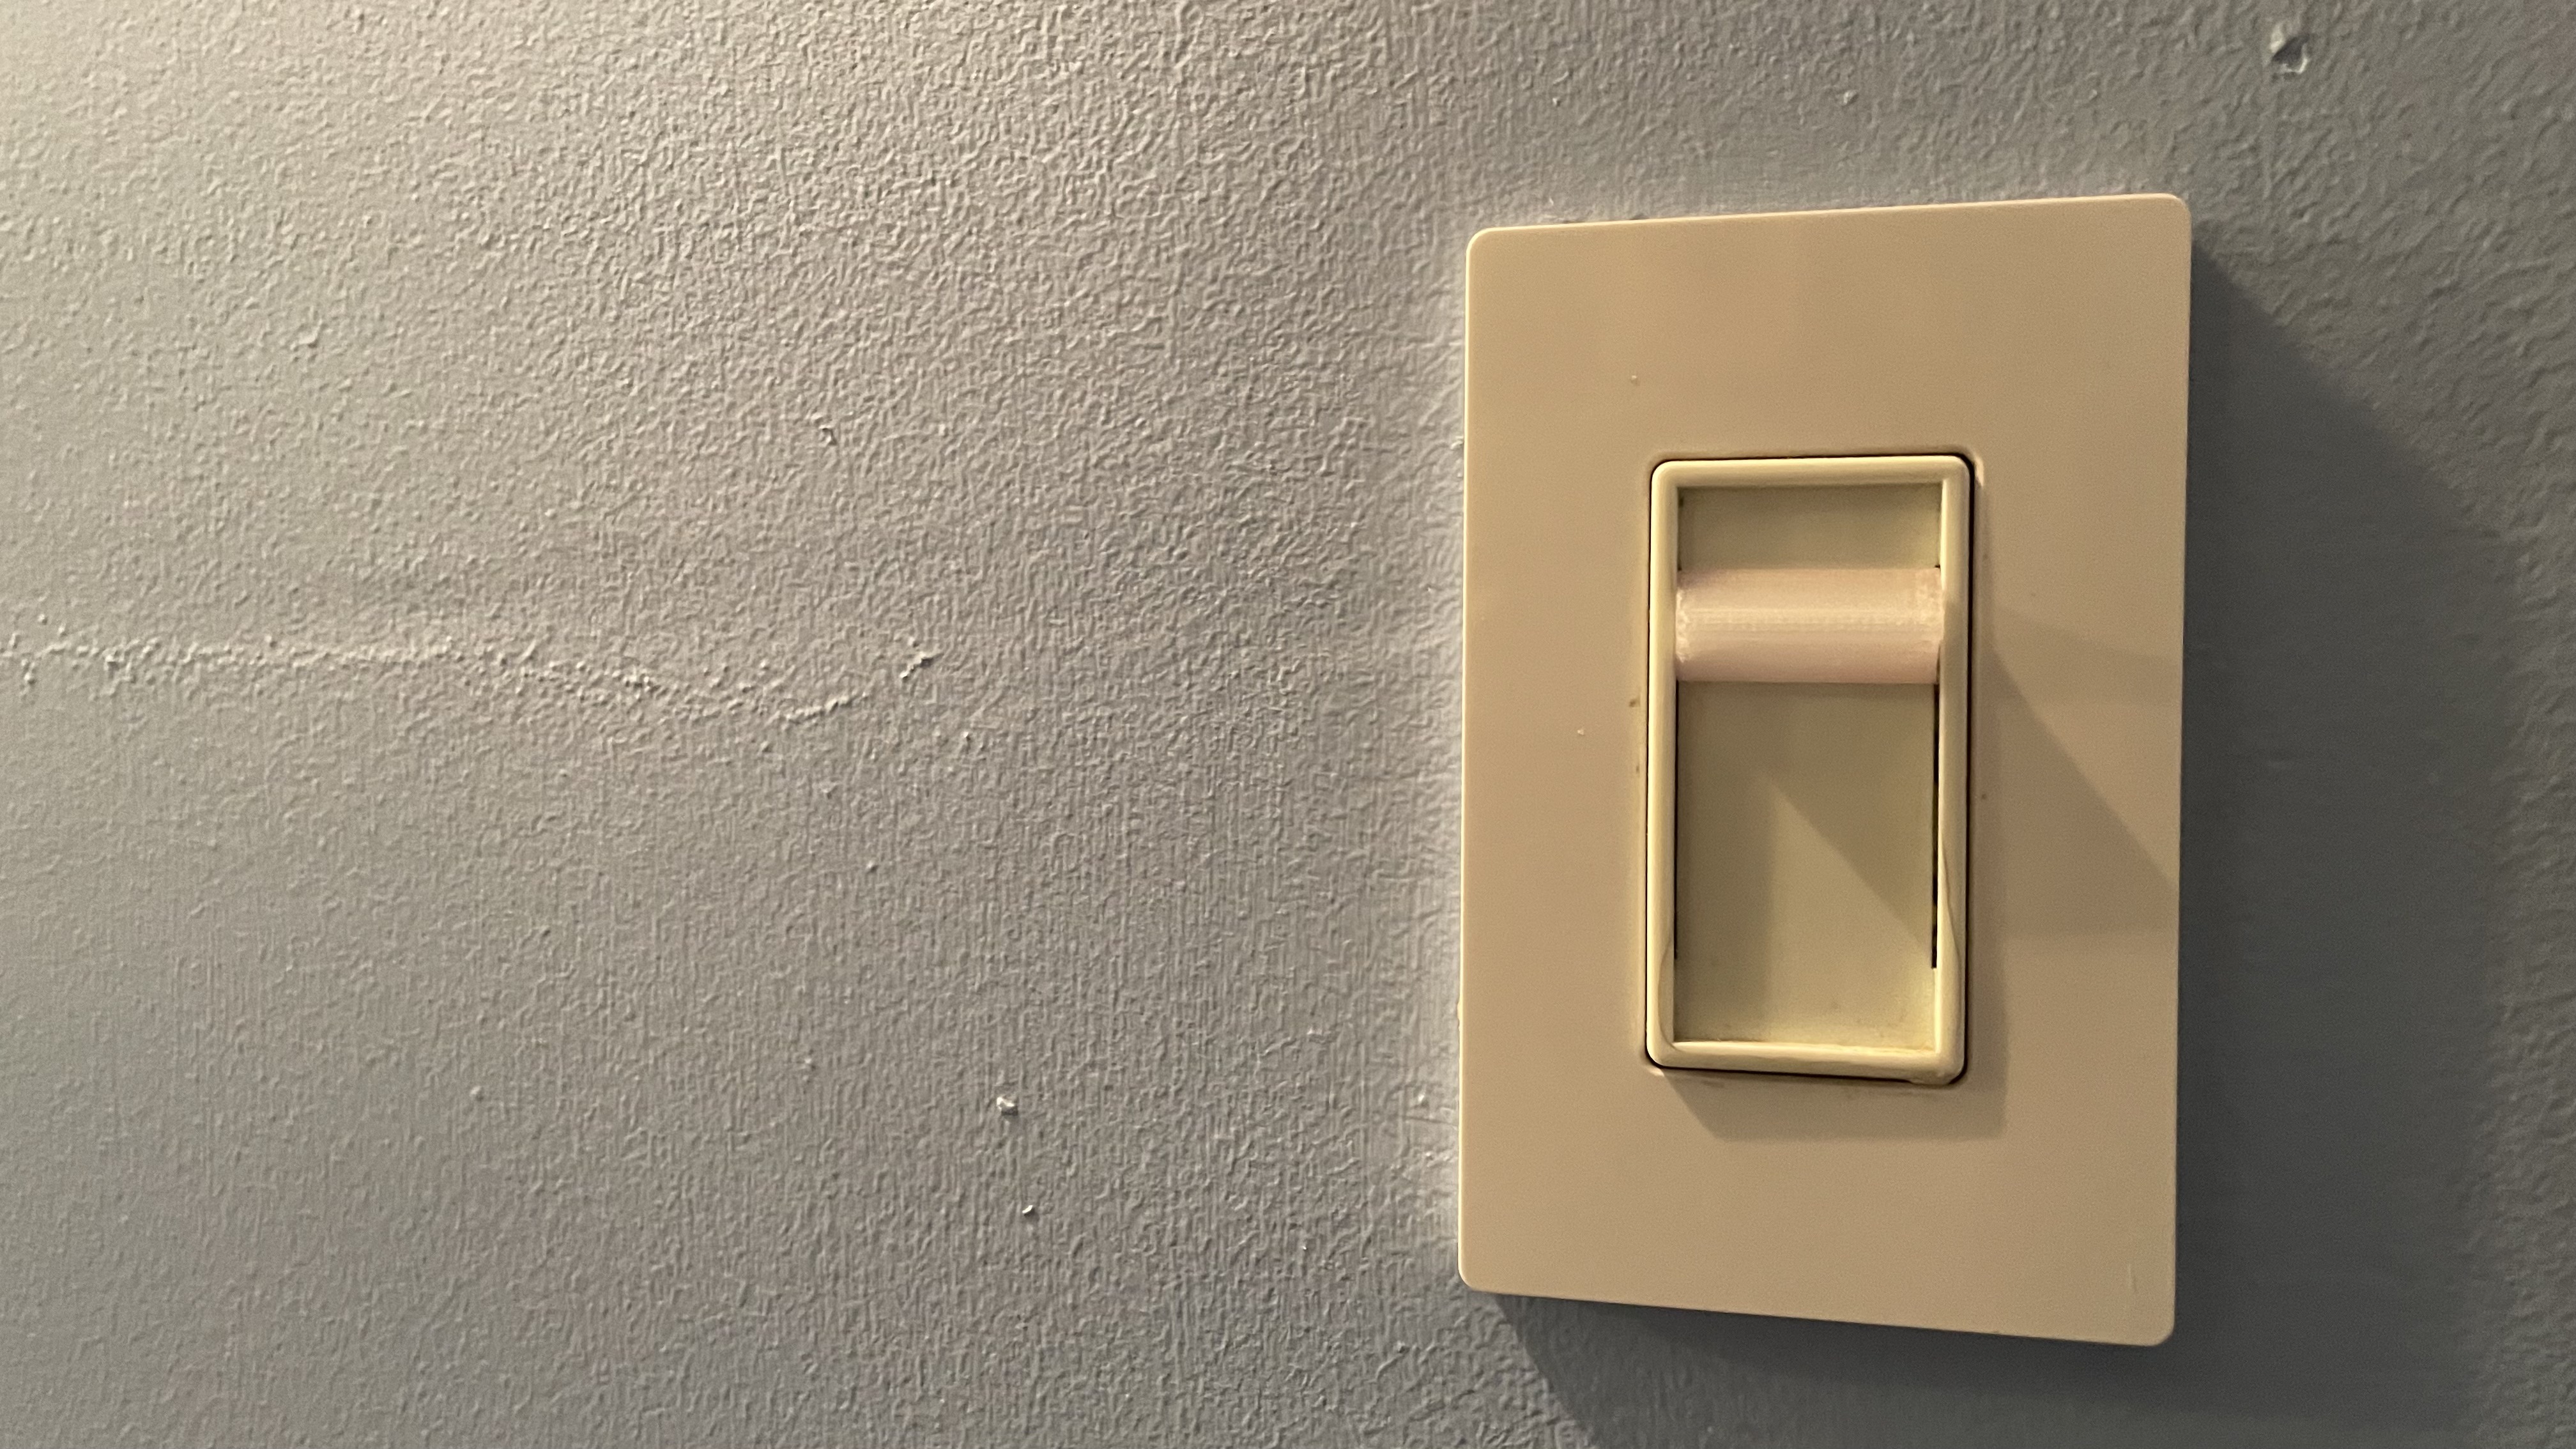 Adjustable light switch fix